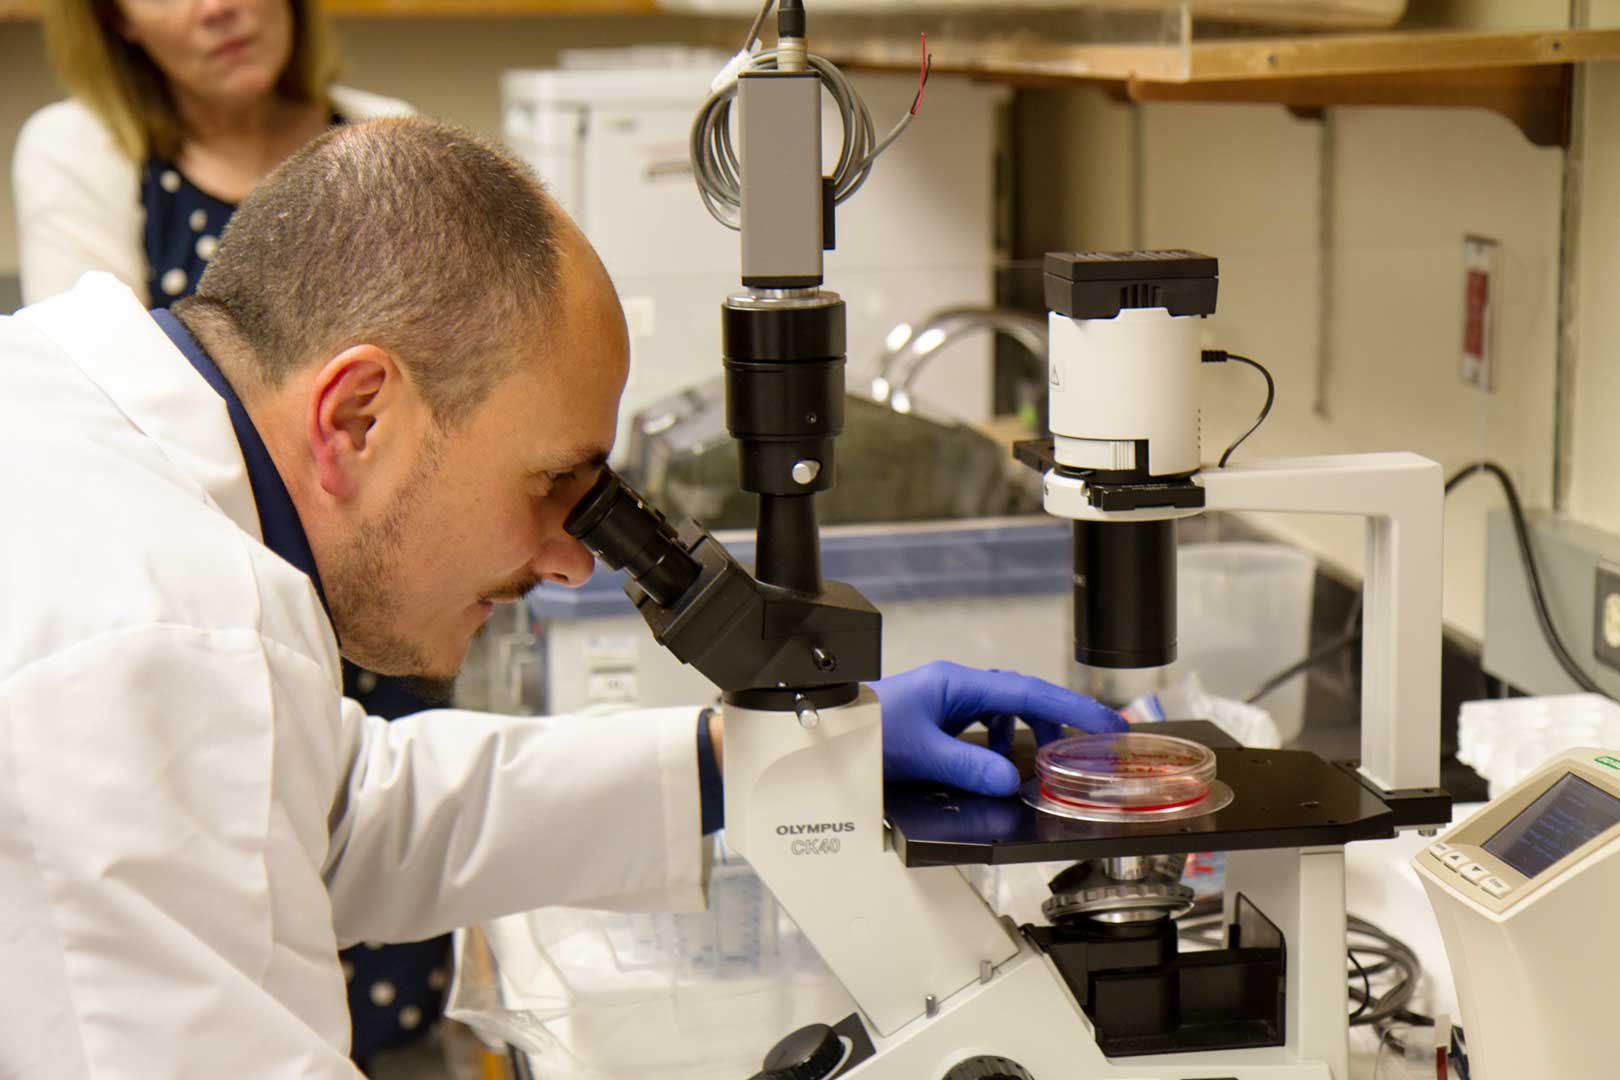 Dr. Fabbri looks at a petri dish of cells using a microscope